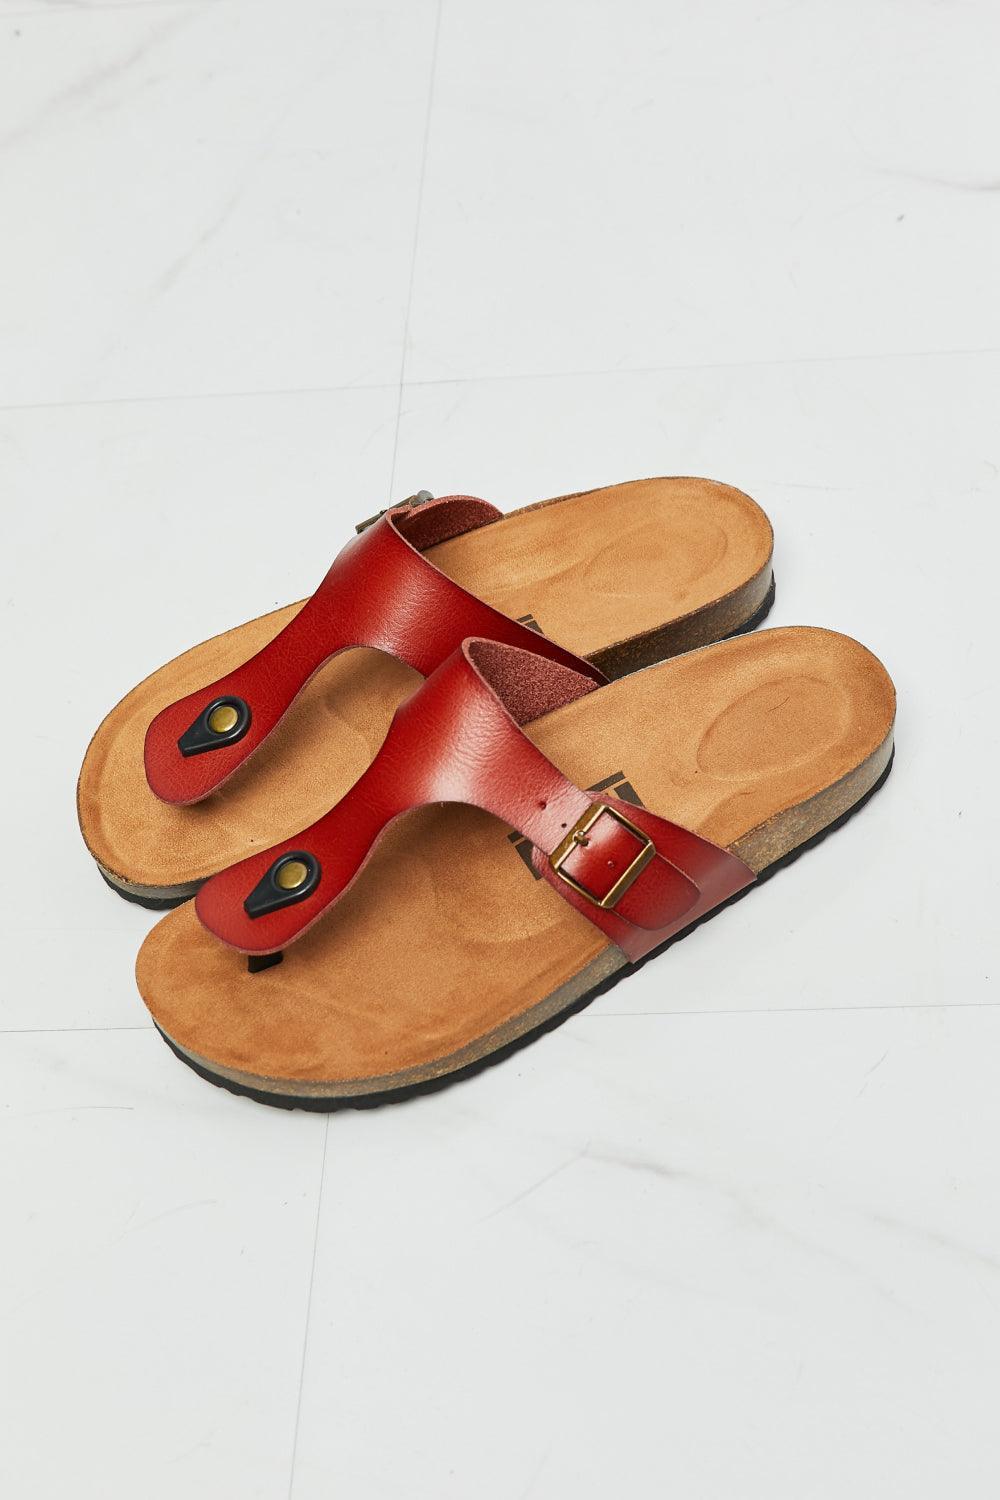 MMShoes T-Strap Open Toe Red Flip-Flops - MXSTUDIO.COM